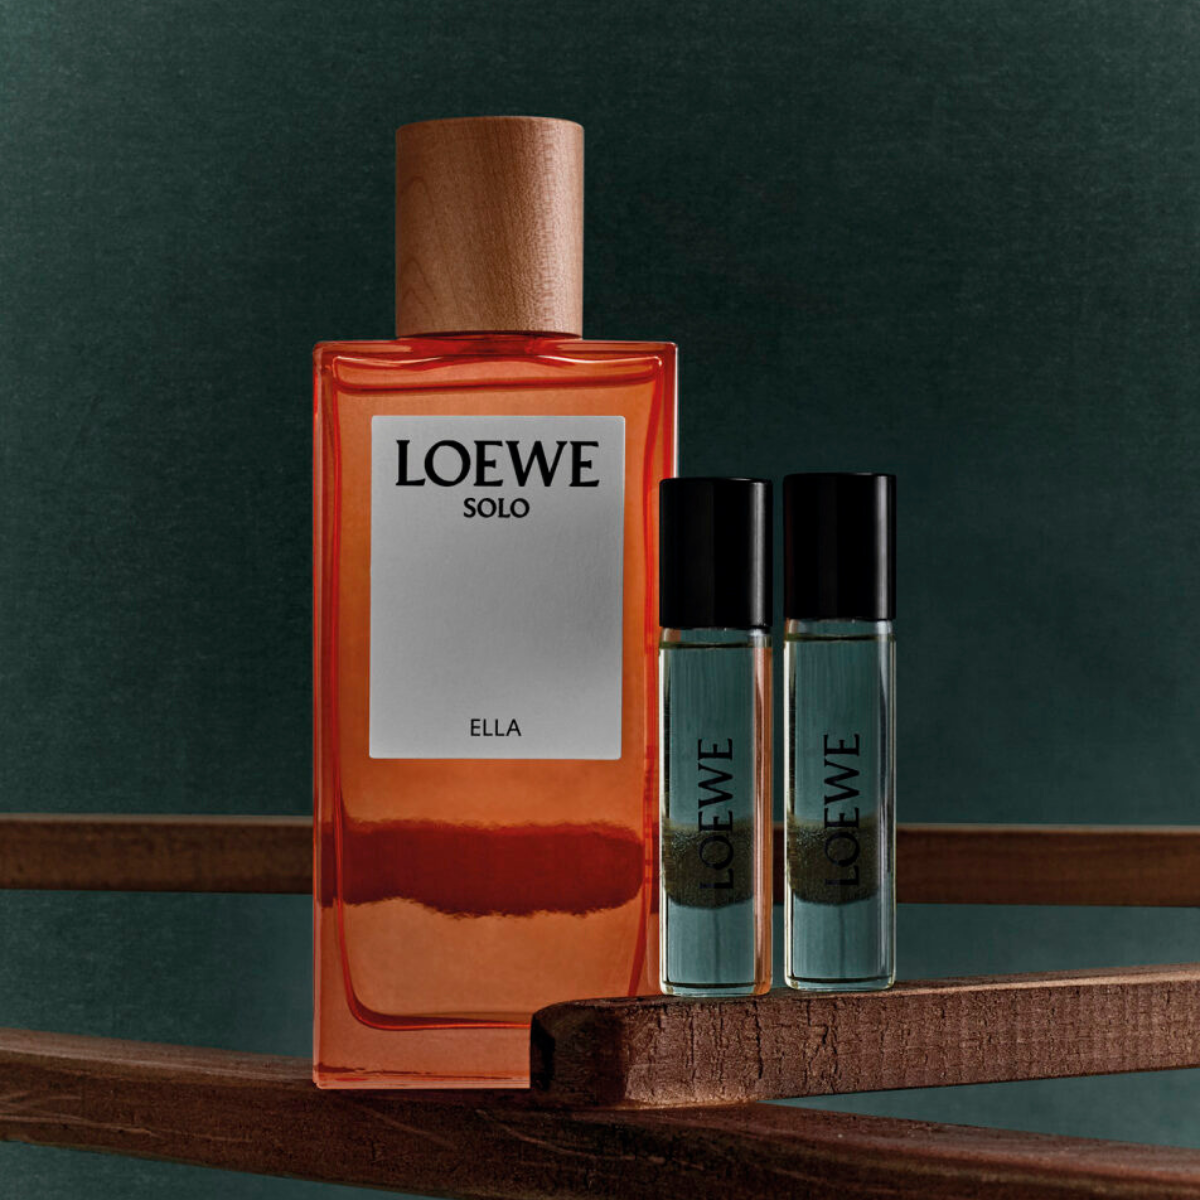 Loewe Set Solo Ella Eau de Parfum - Felix Online